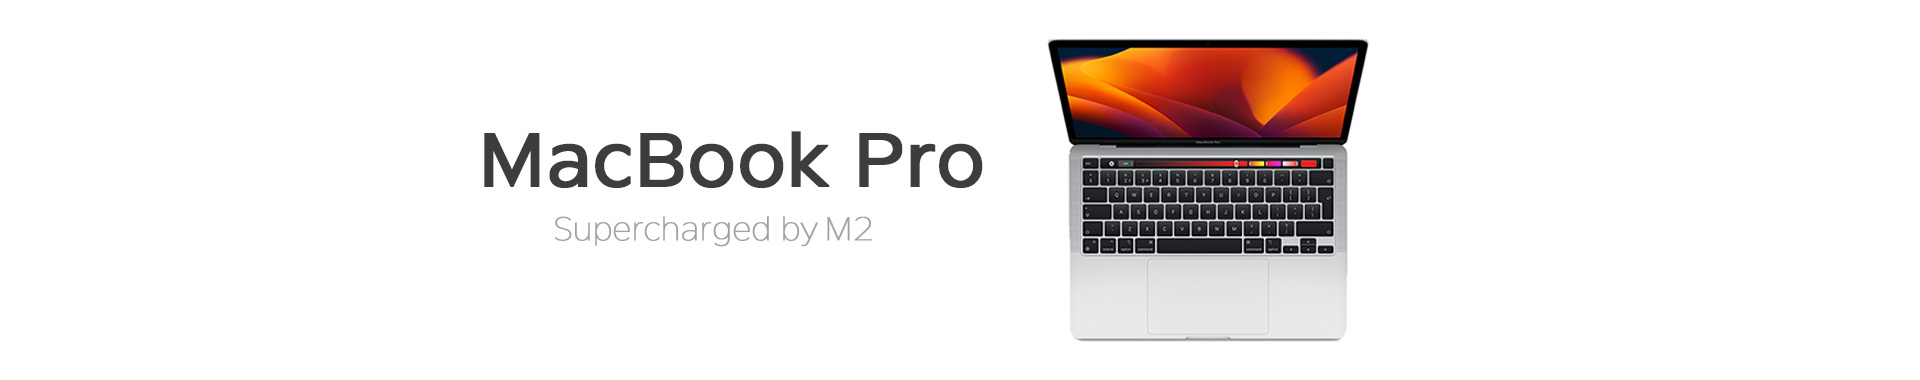 macbook_pro_m2.jpg